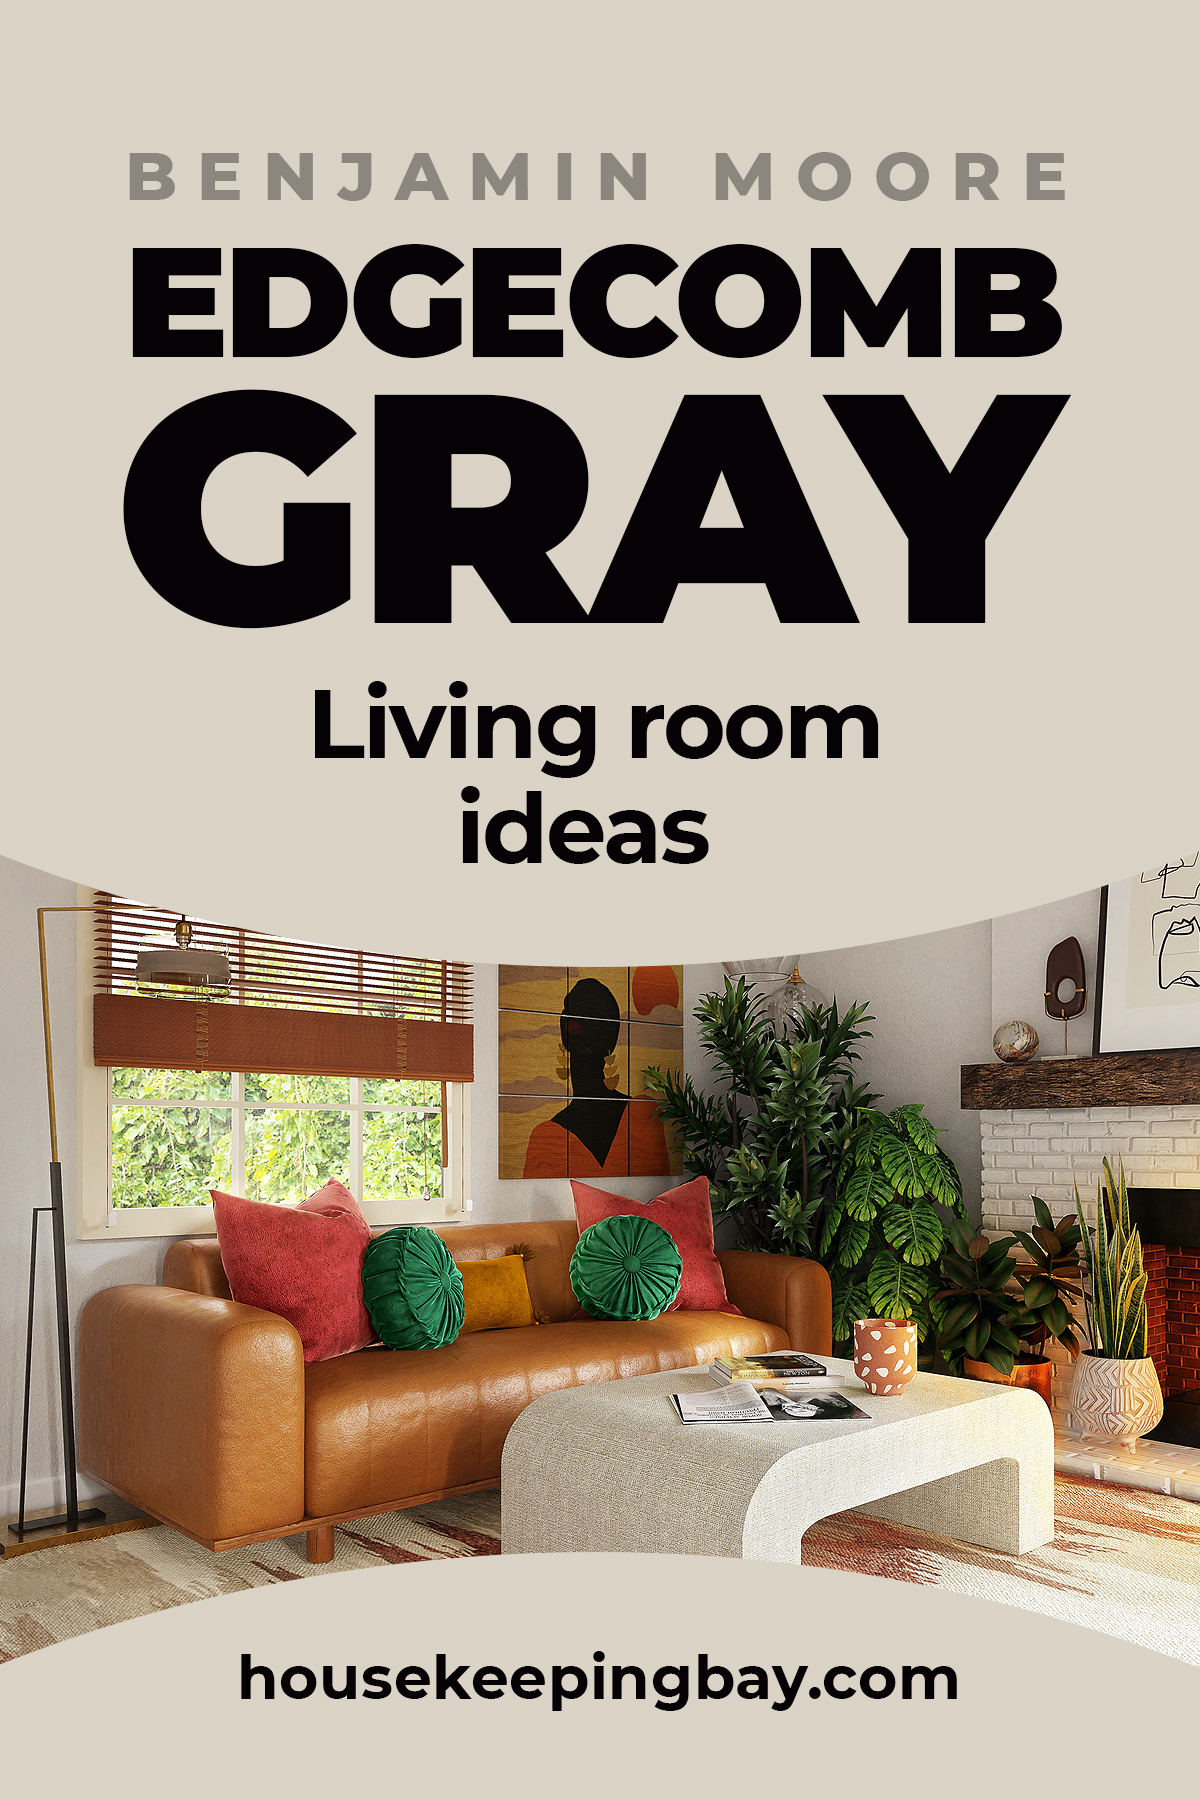 Edgecomb Gray living room ideas